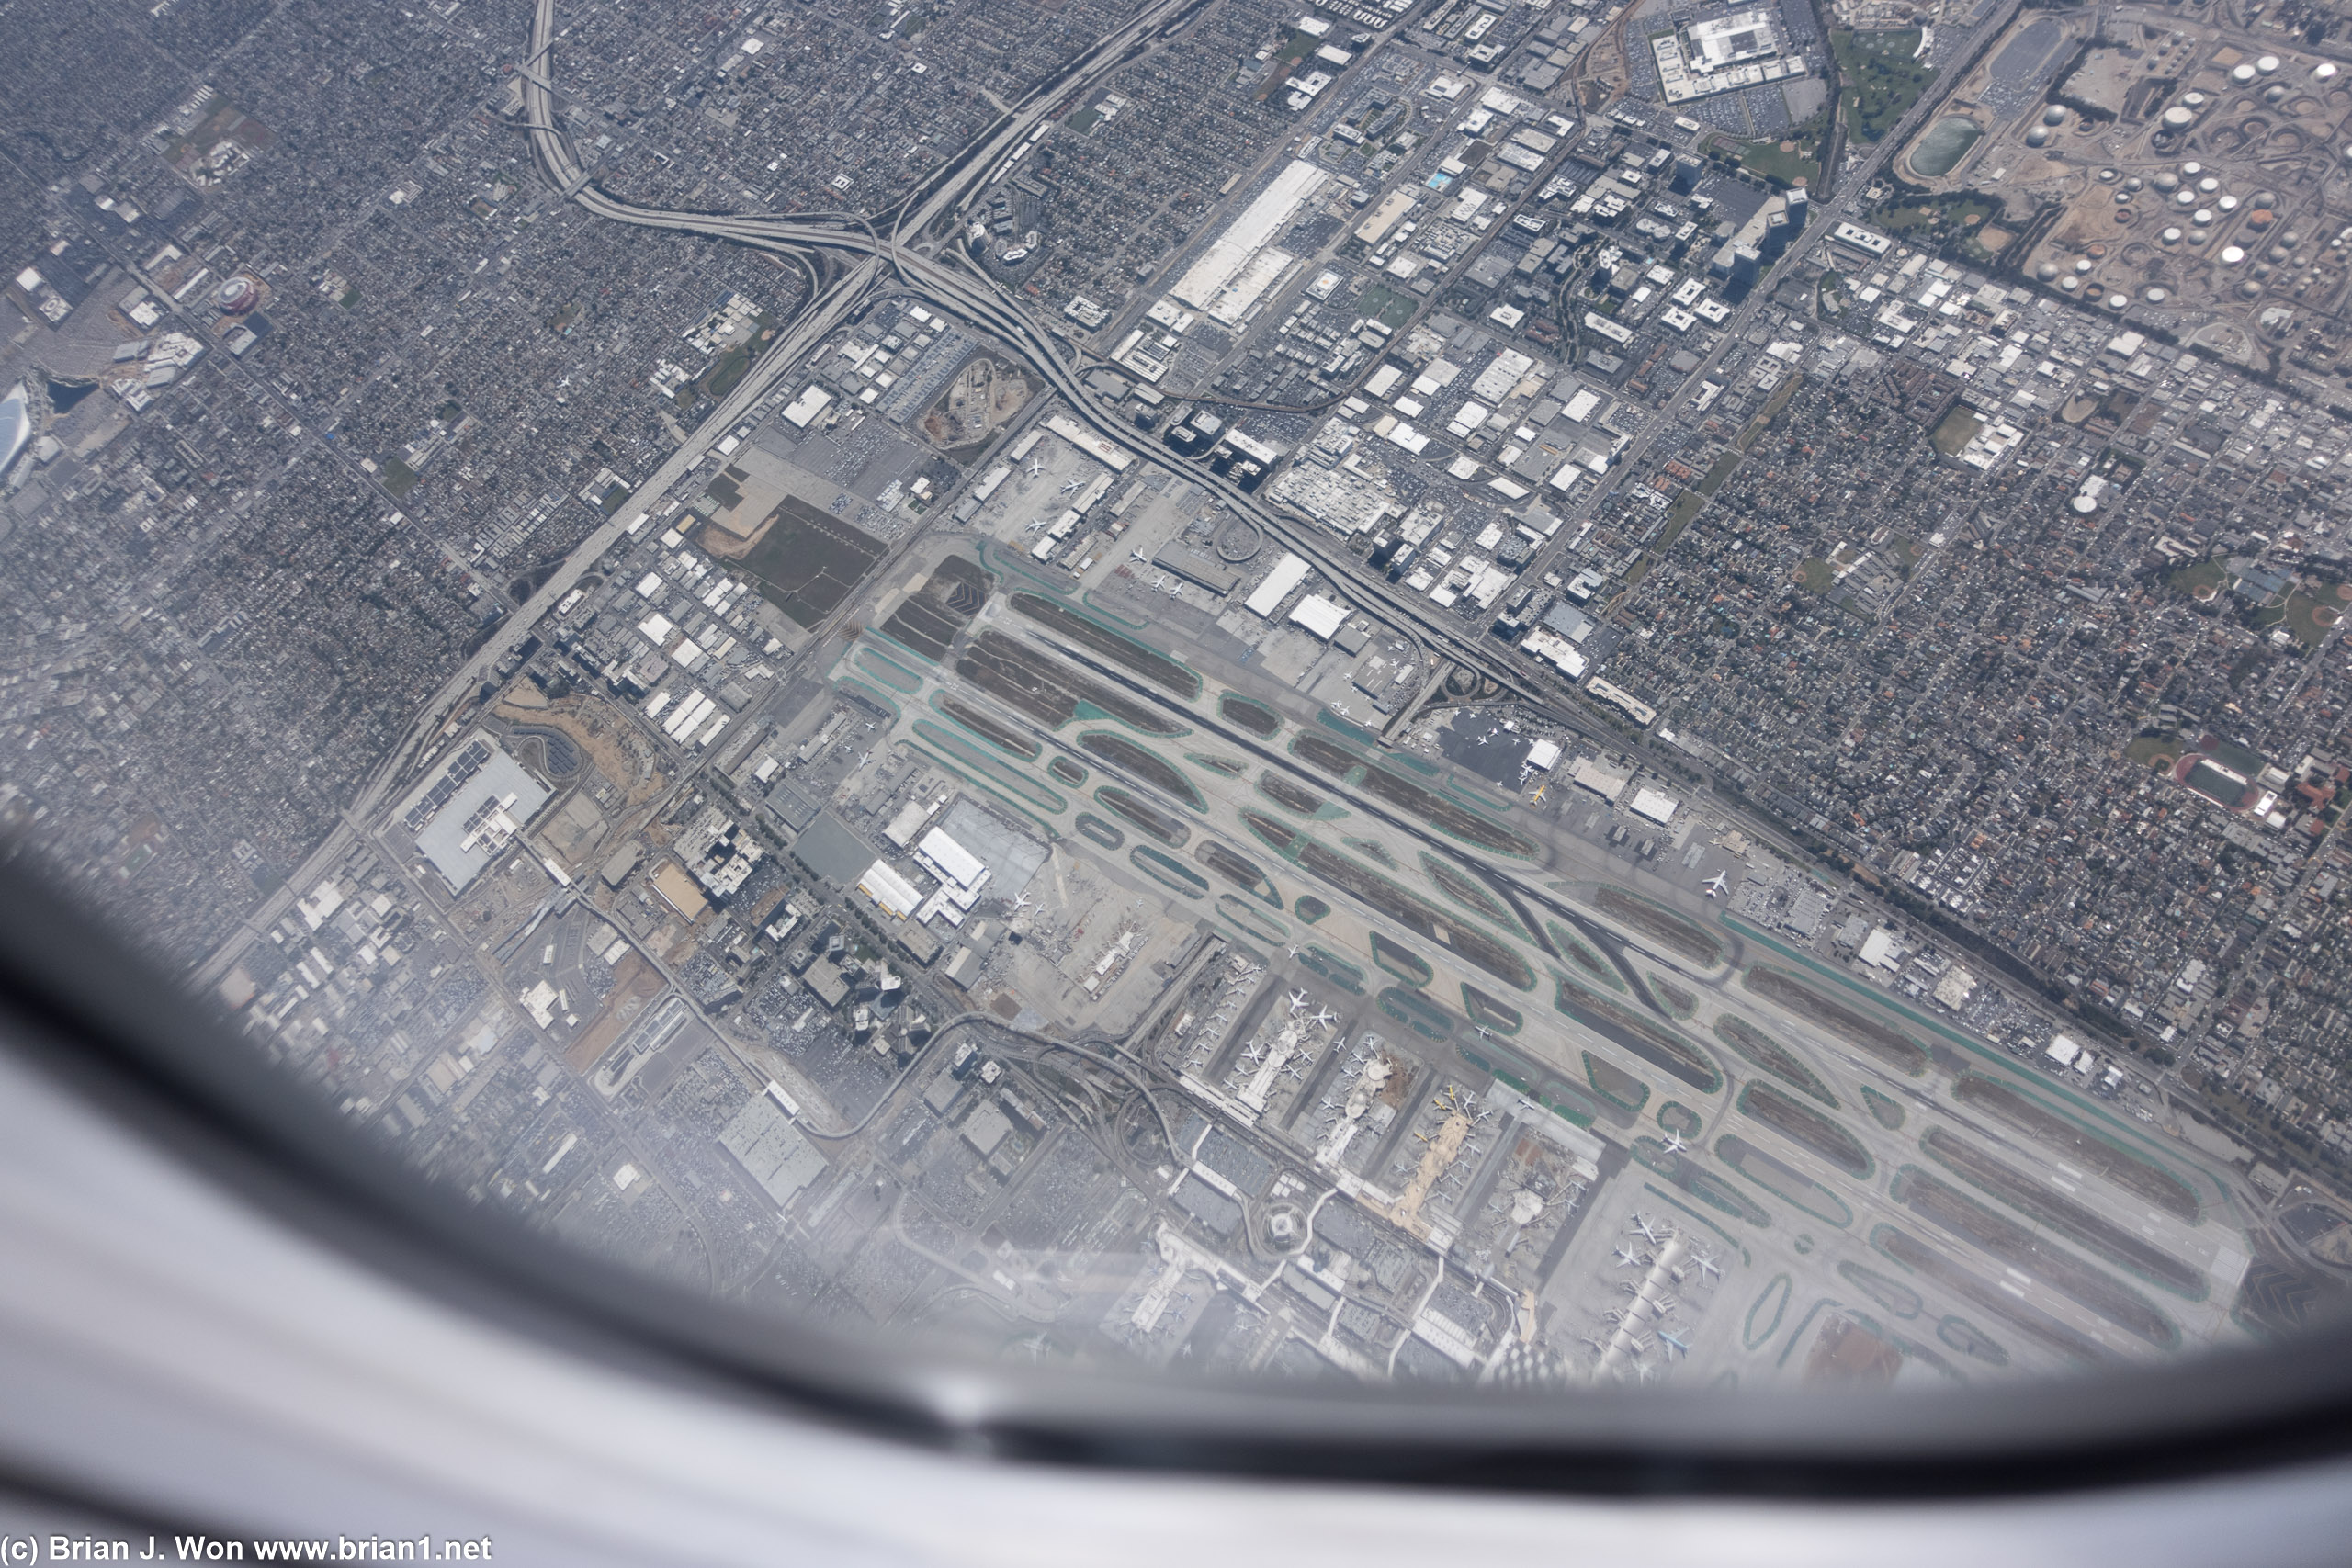 Unusual flight path took us right over LAX.